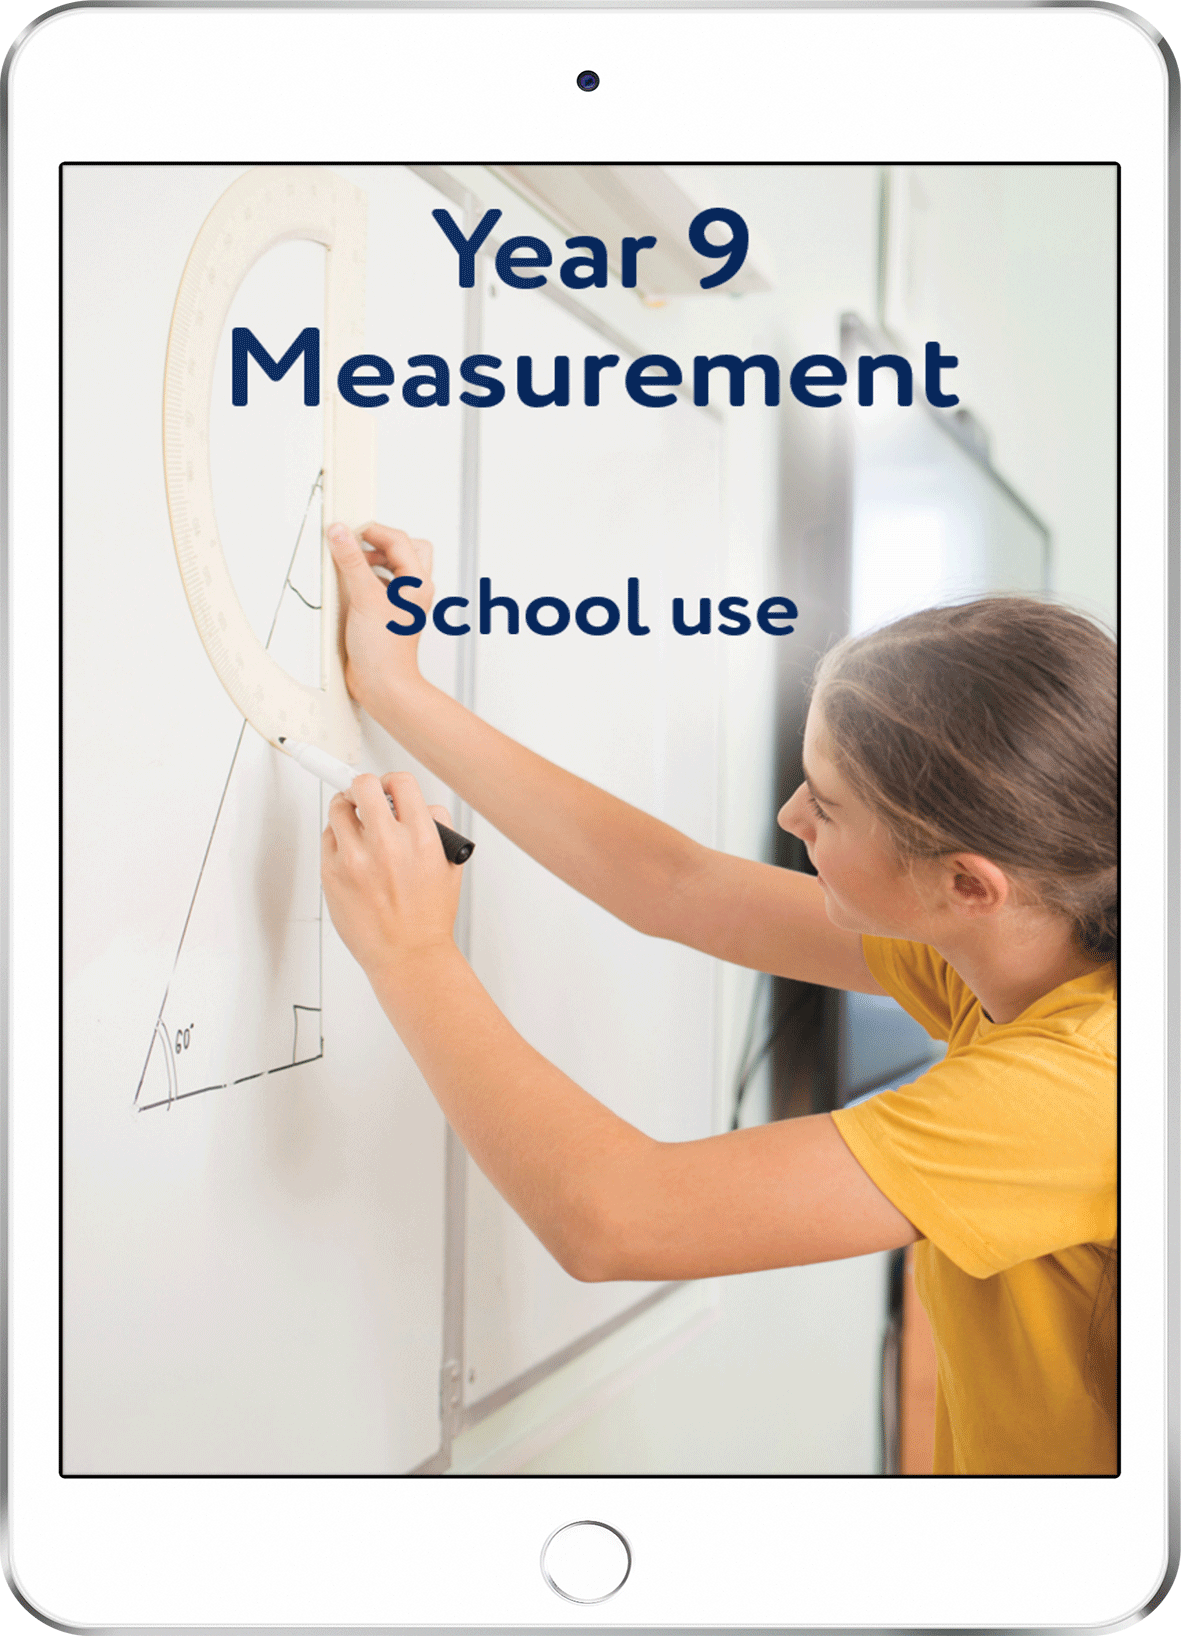 Year 9 Measurement - School Use